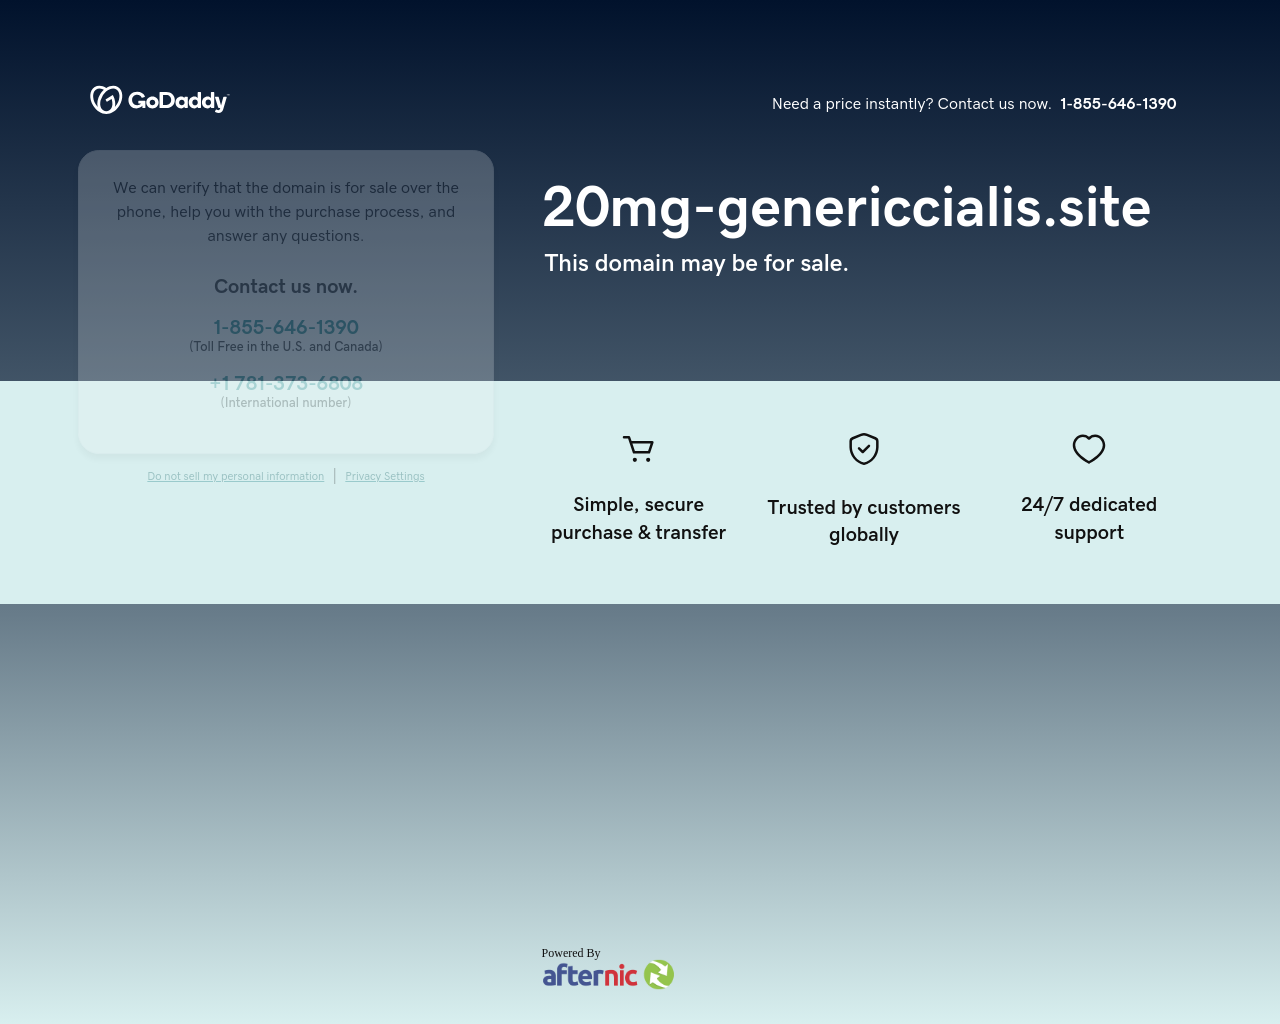 20mg-genericcialis.site